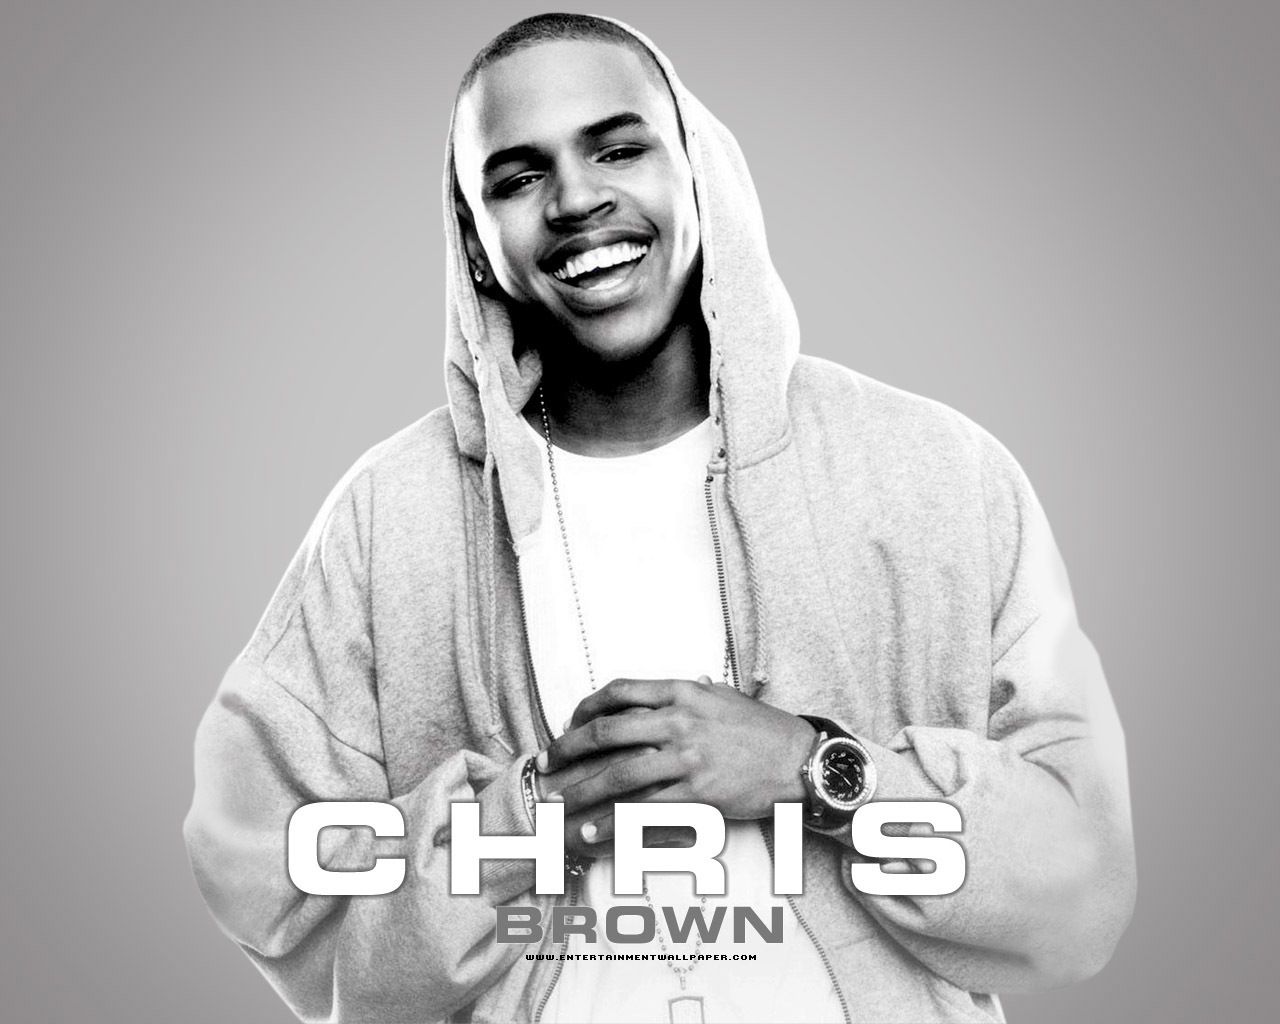 Chris♥ - Chris Brown Wallpaper (6446965) - Fanpop